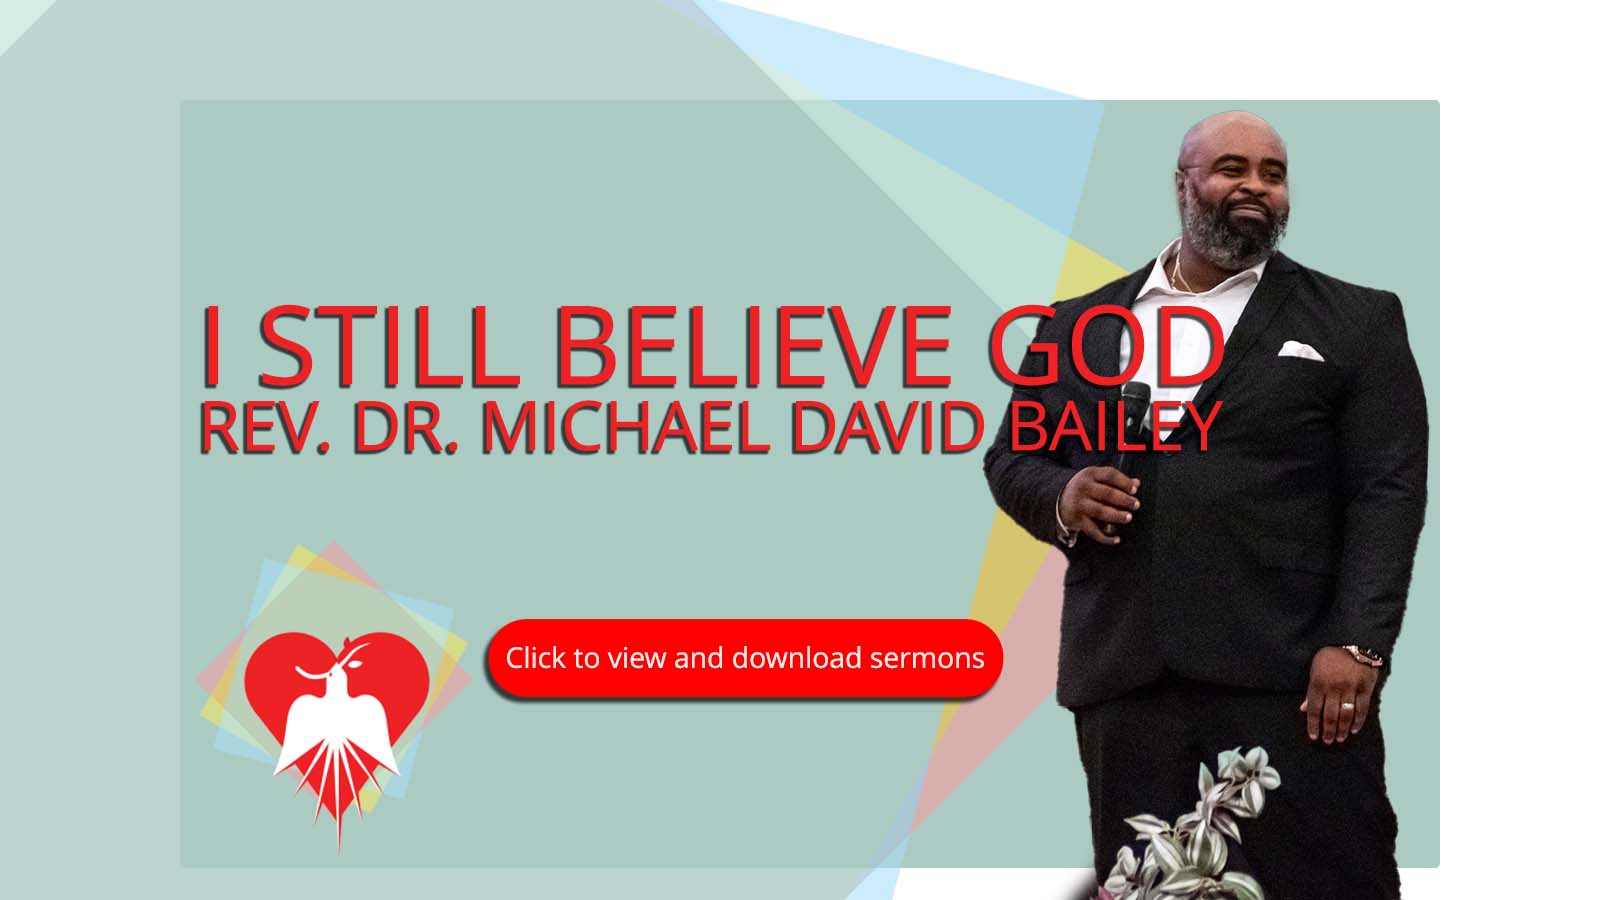 Rev. Dr. Michael David Bailey